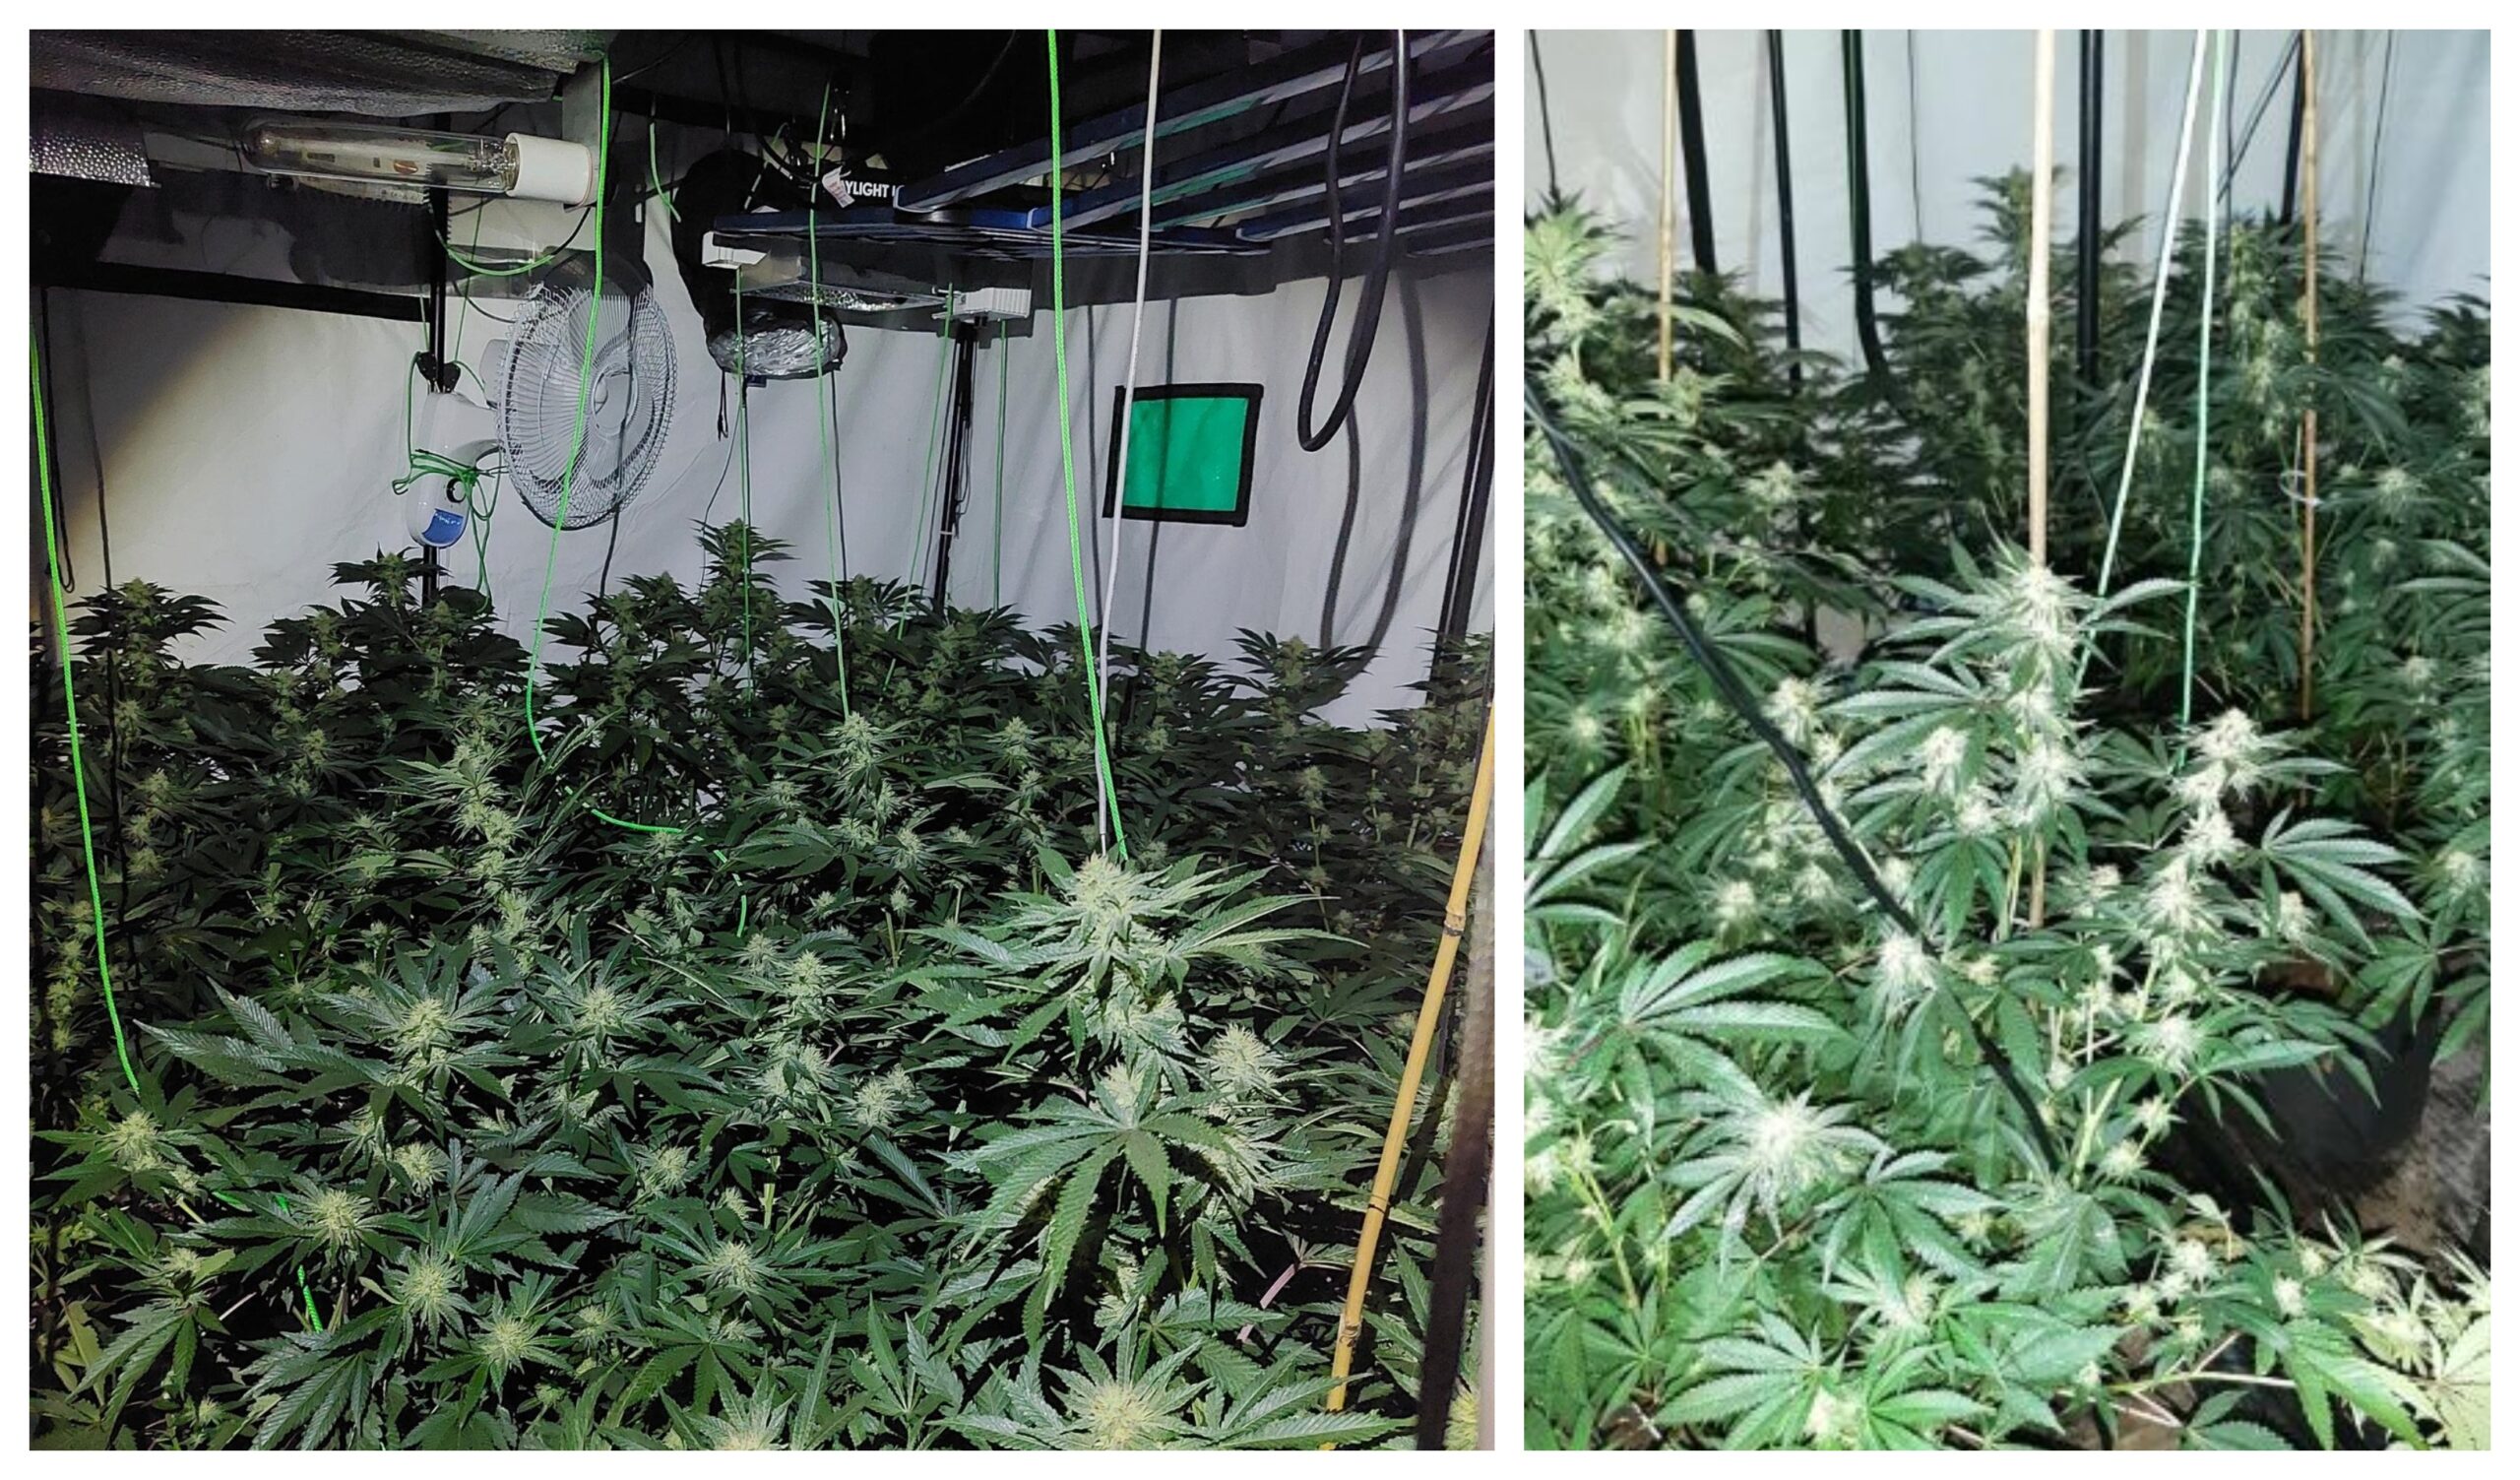 Arnoldas Stasys had 67 cannabis plants growing in his home at Doddington when police raided it